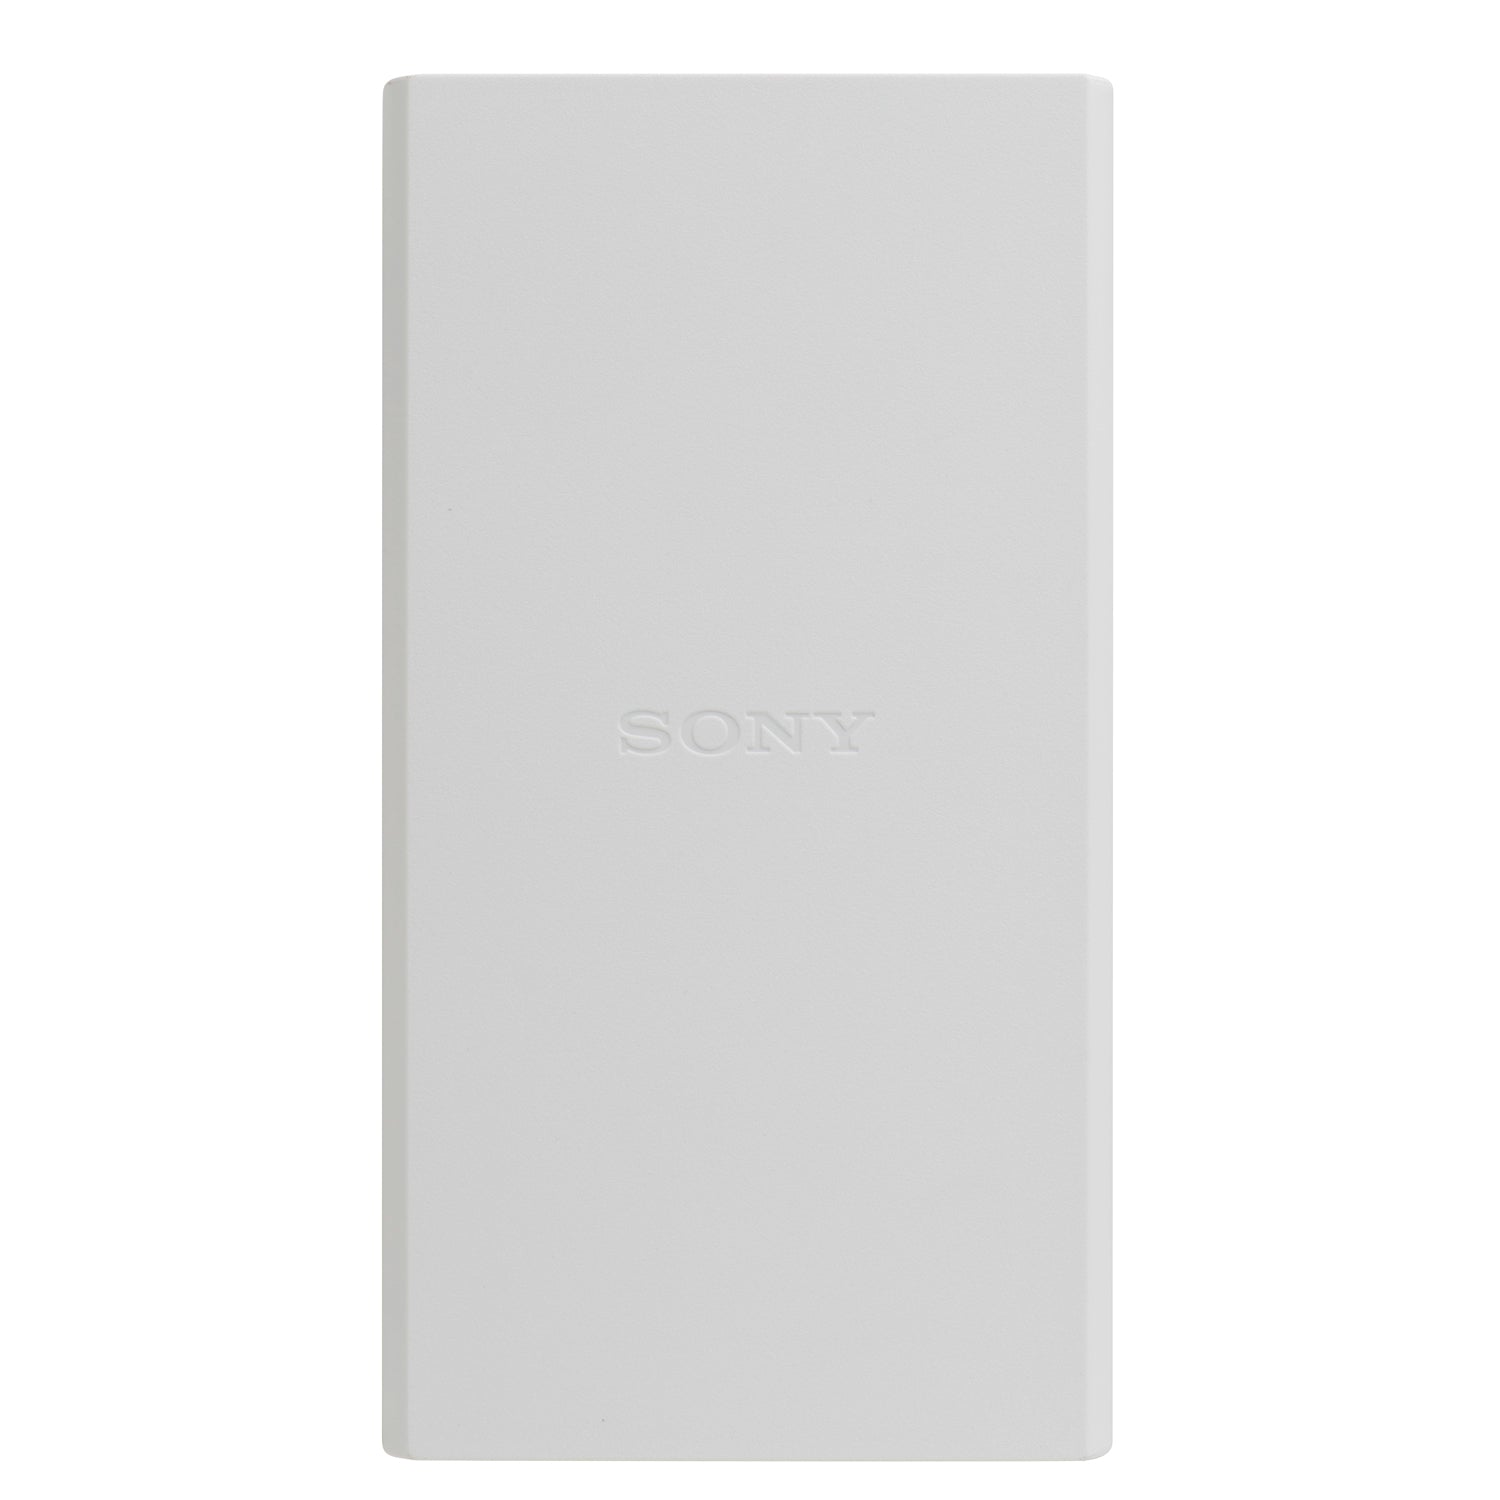 Sony CP-V10B USB Power Bank